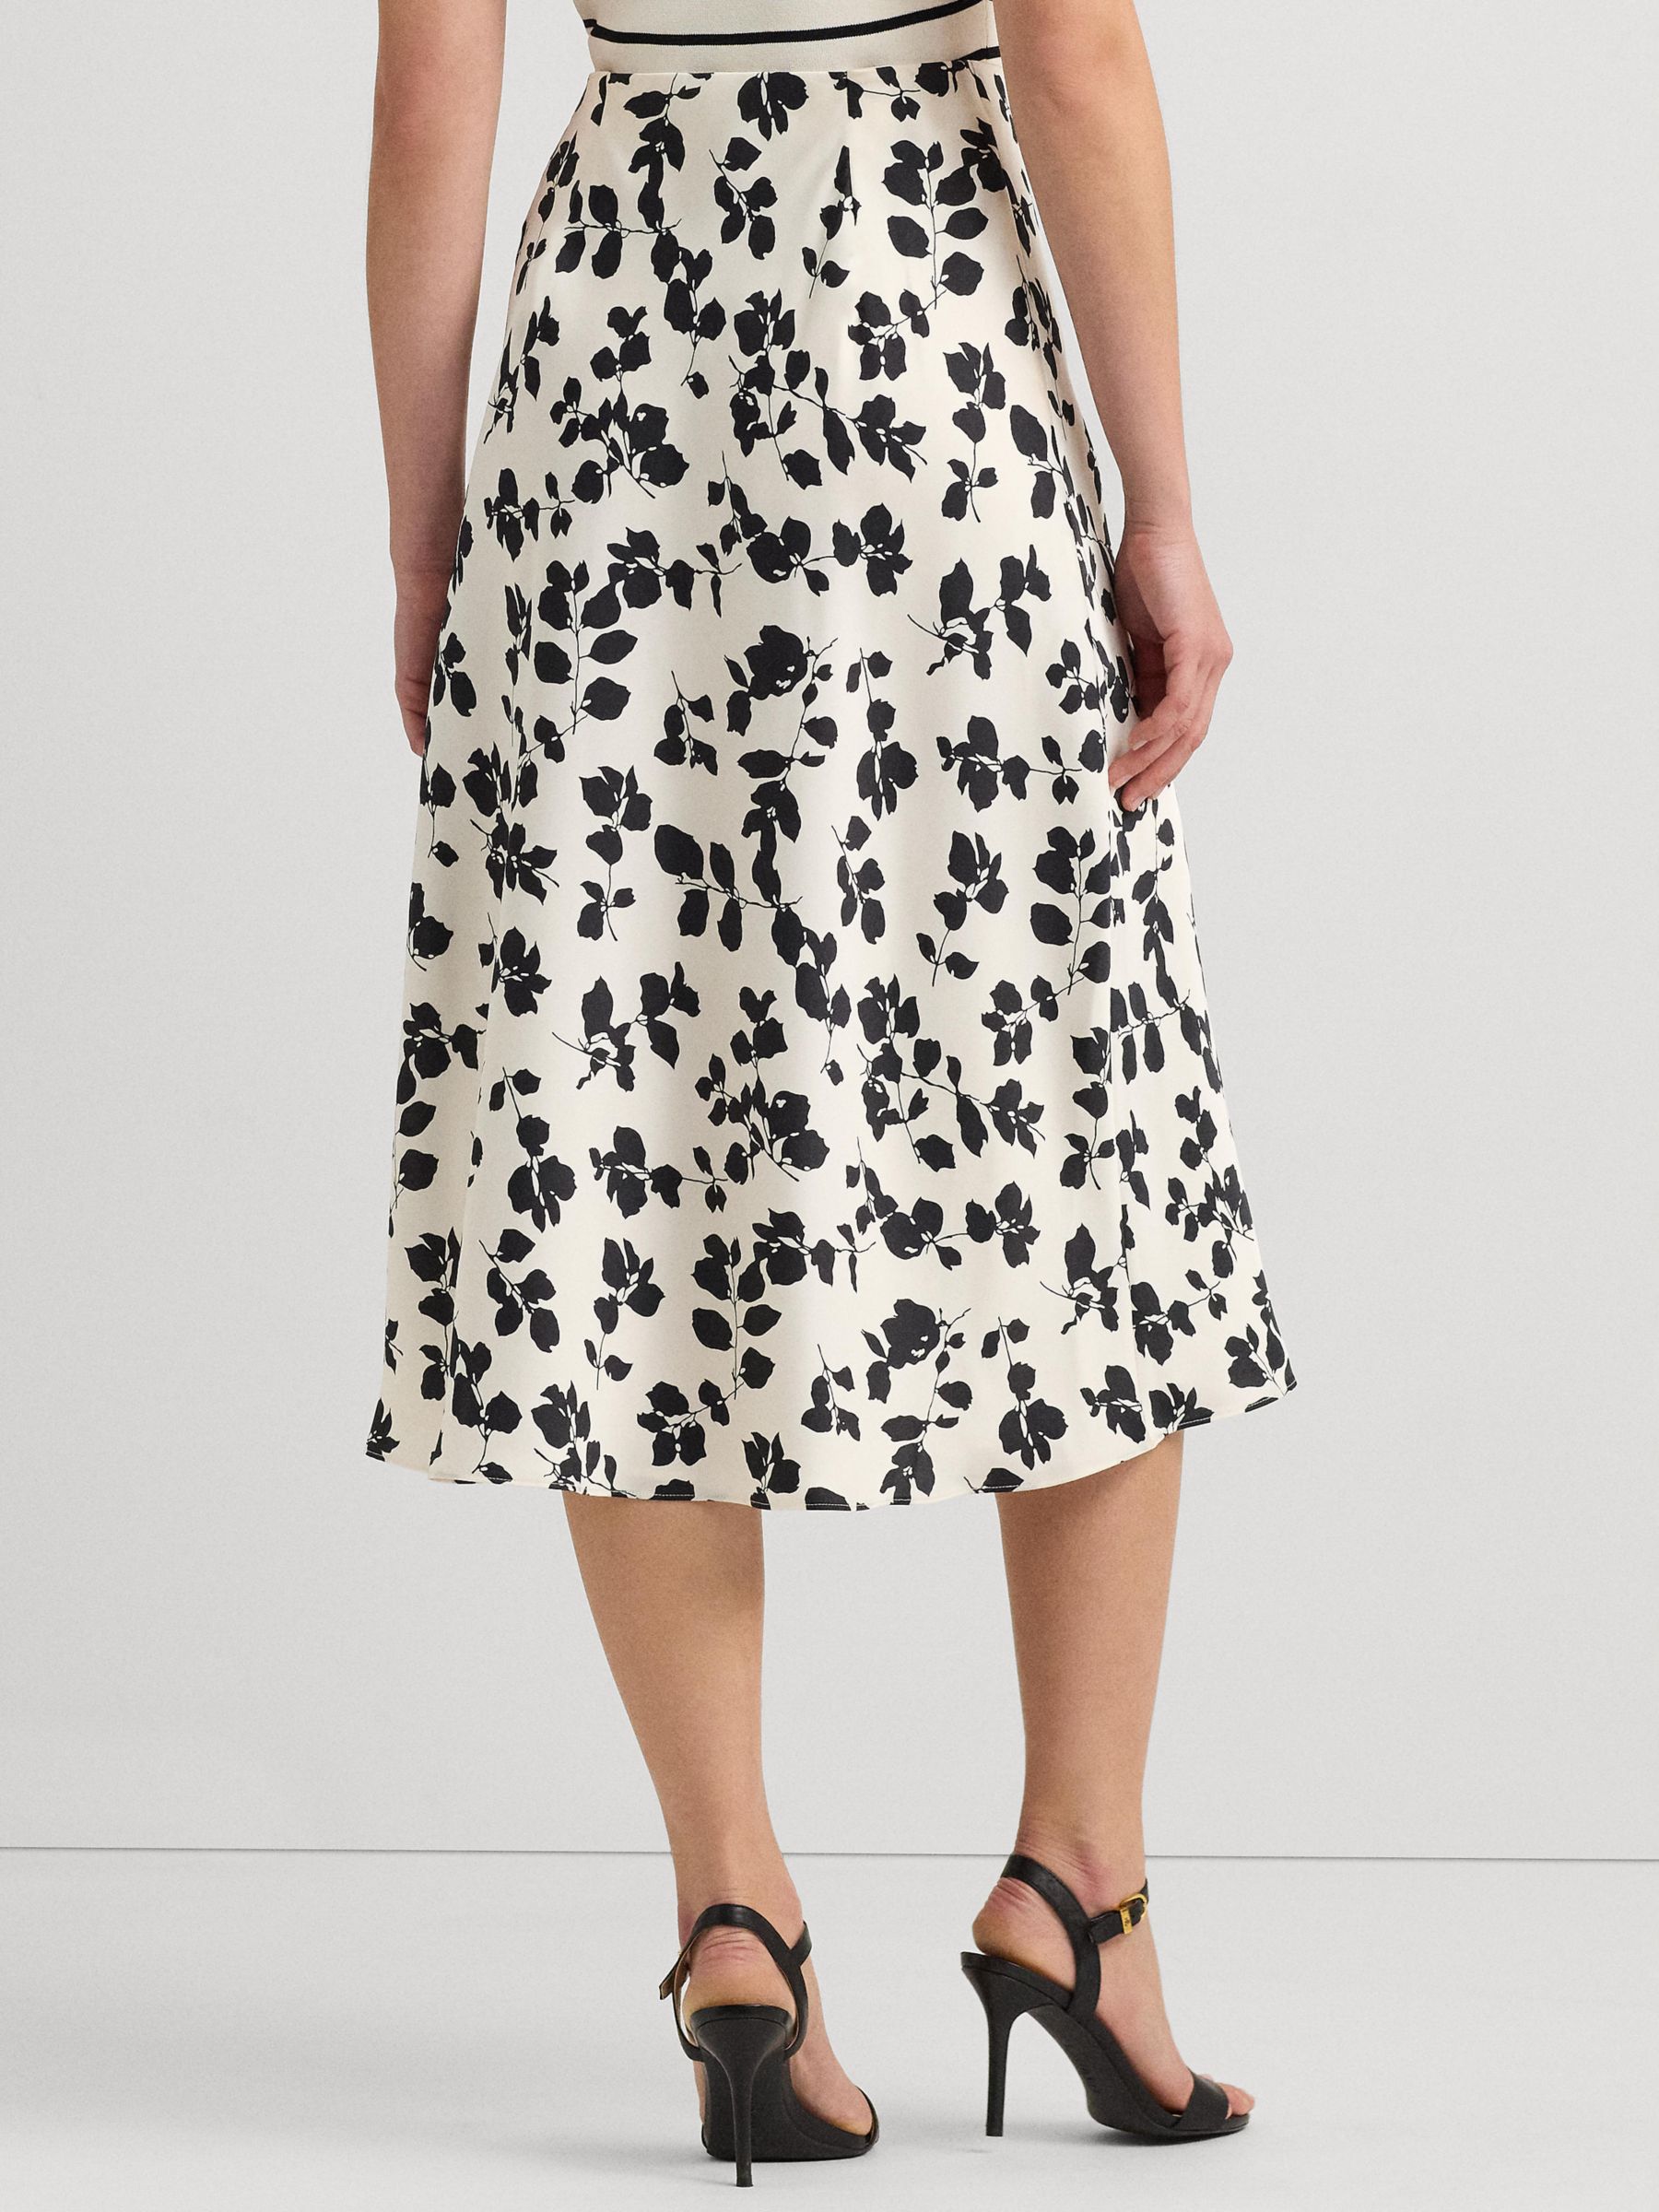 Lauren Ralph Lauren Sharae Leaf Print A-Line Midi Skirt, Natural/Multi, 8